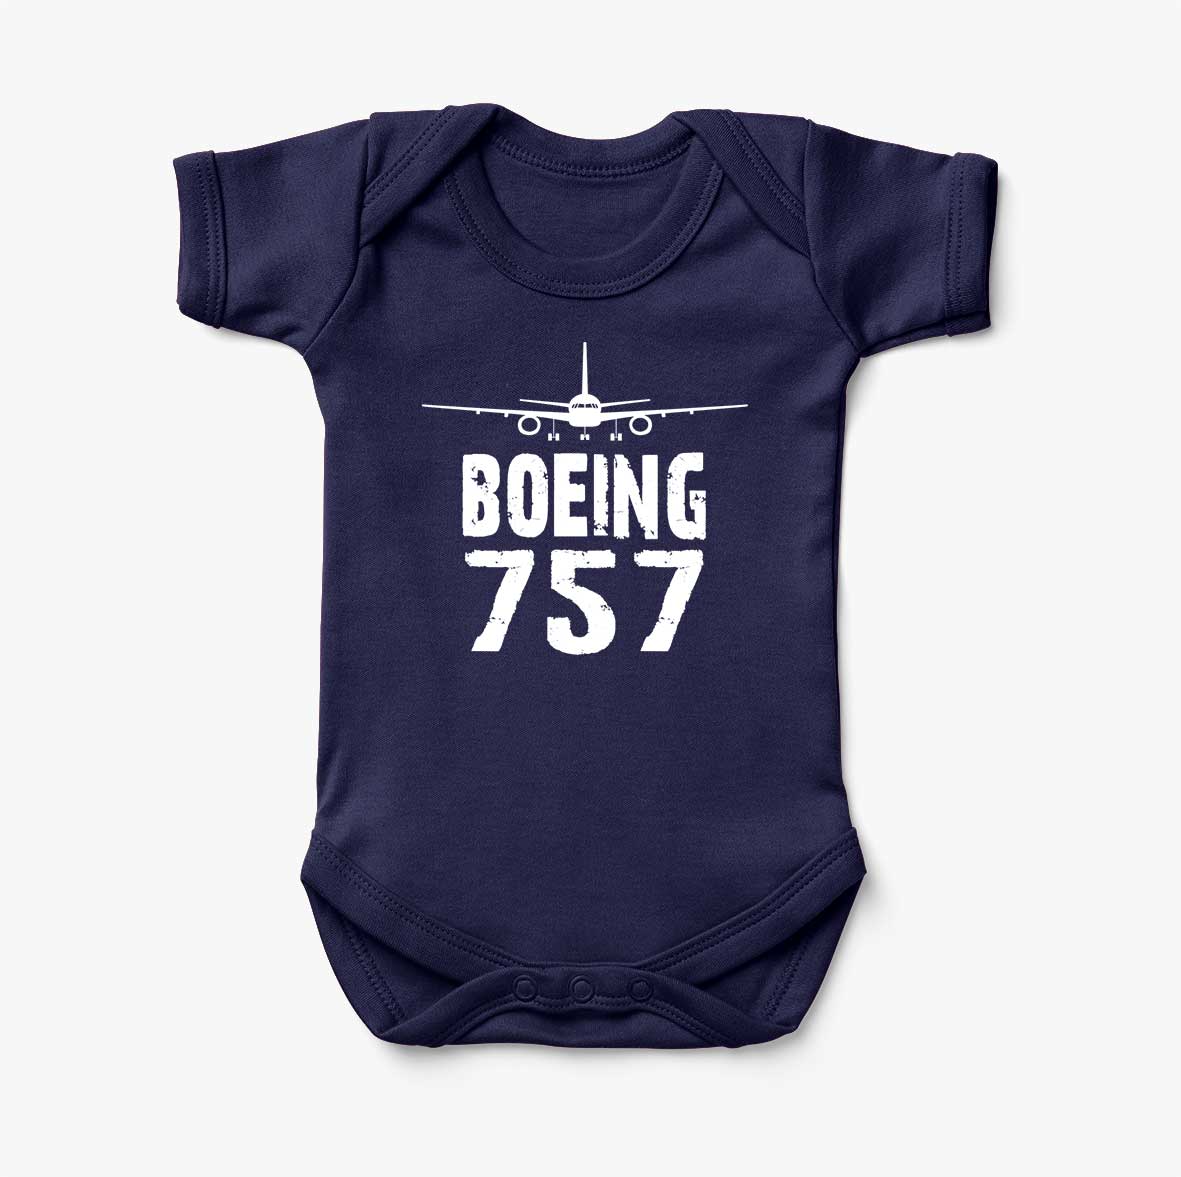 Boeing 757 & Plane Designed Baby Bodysuits